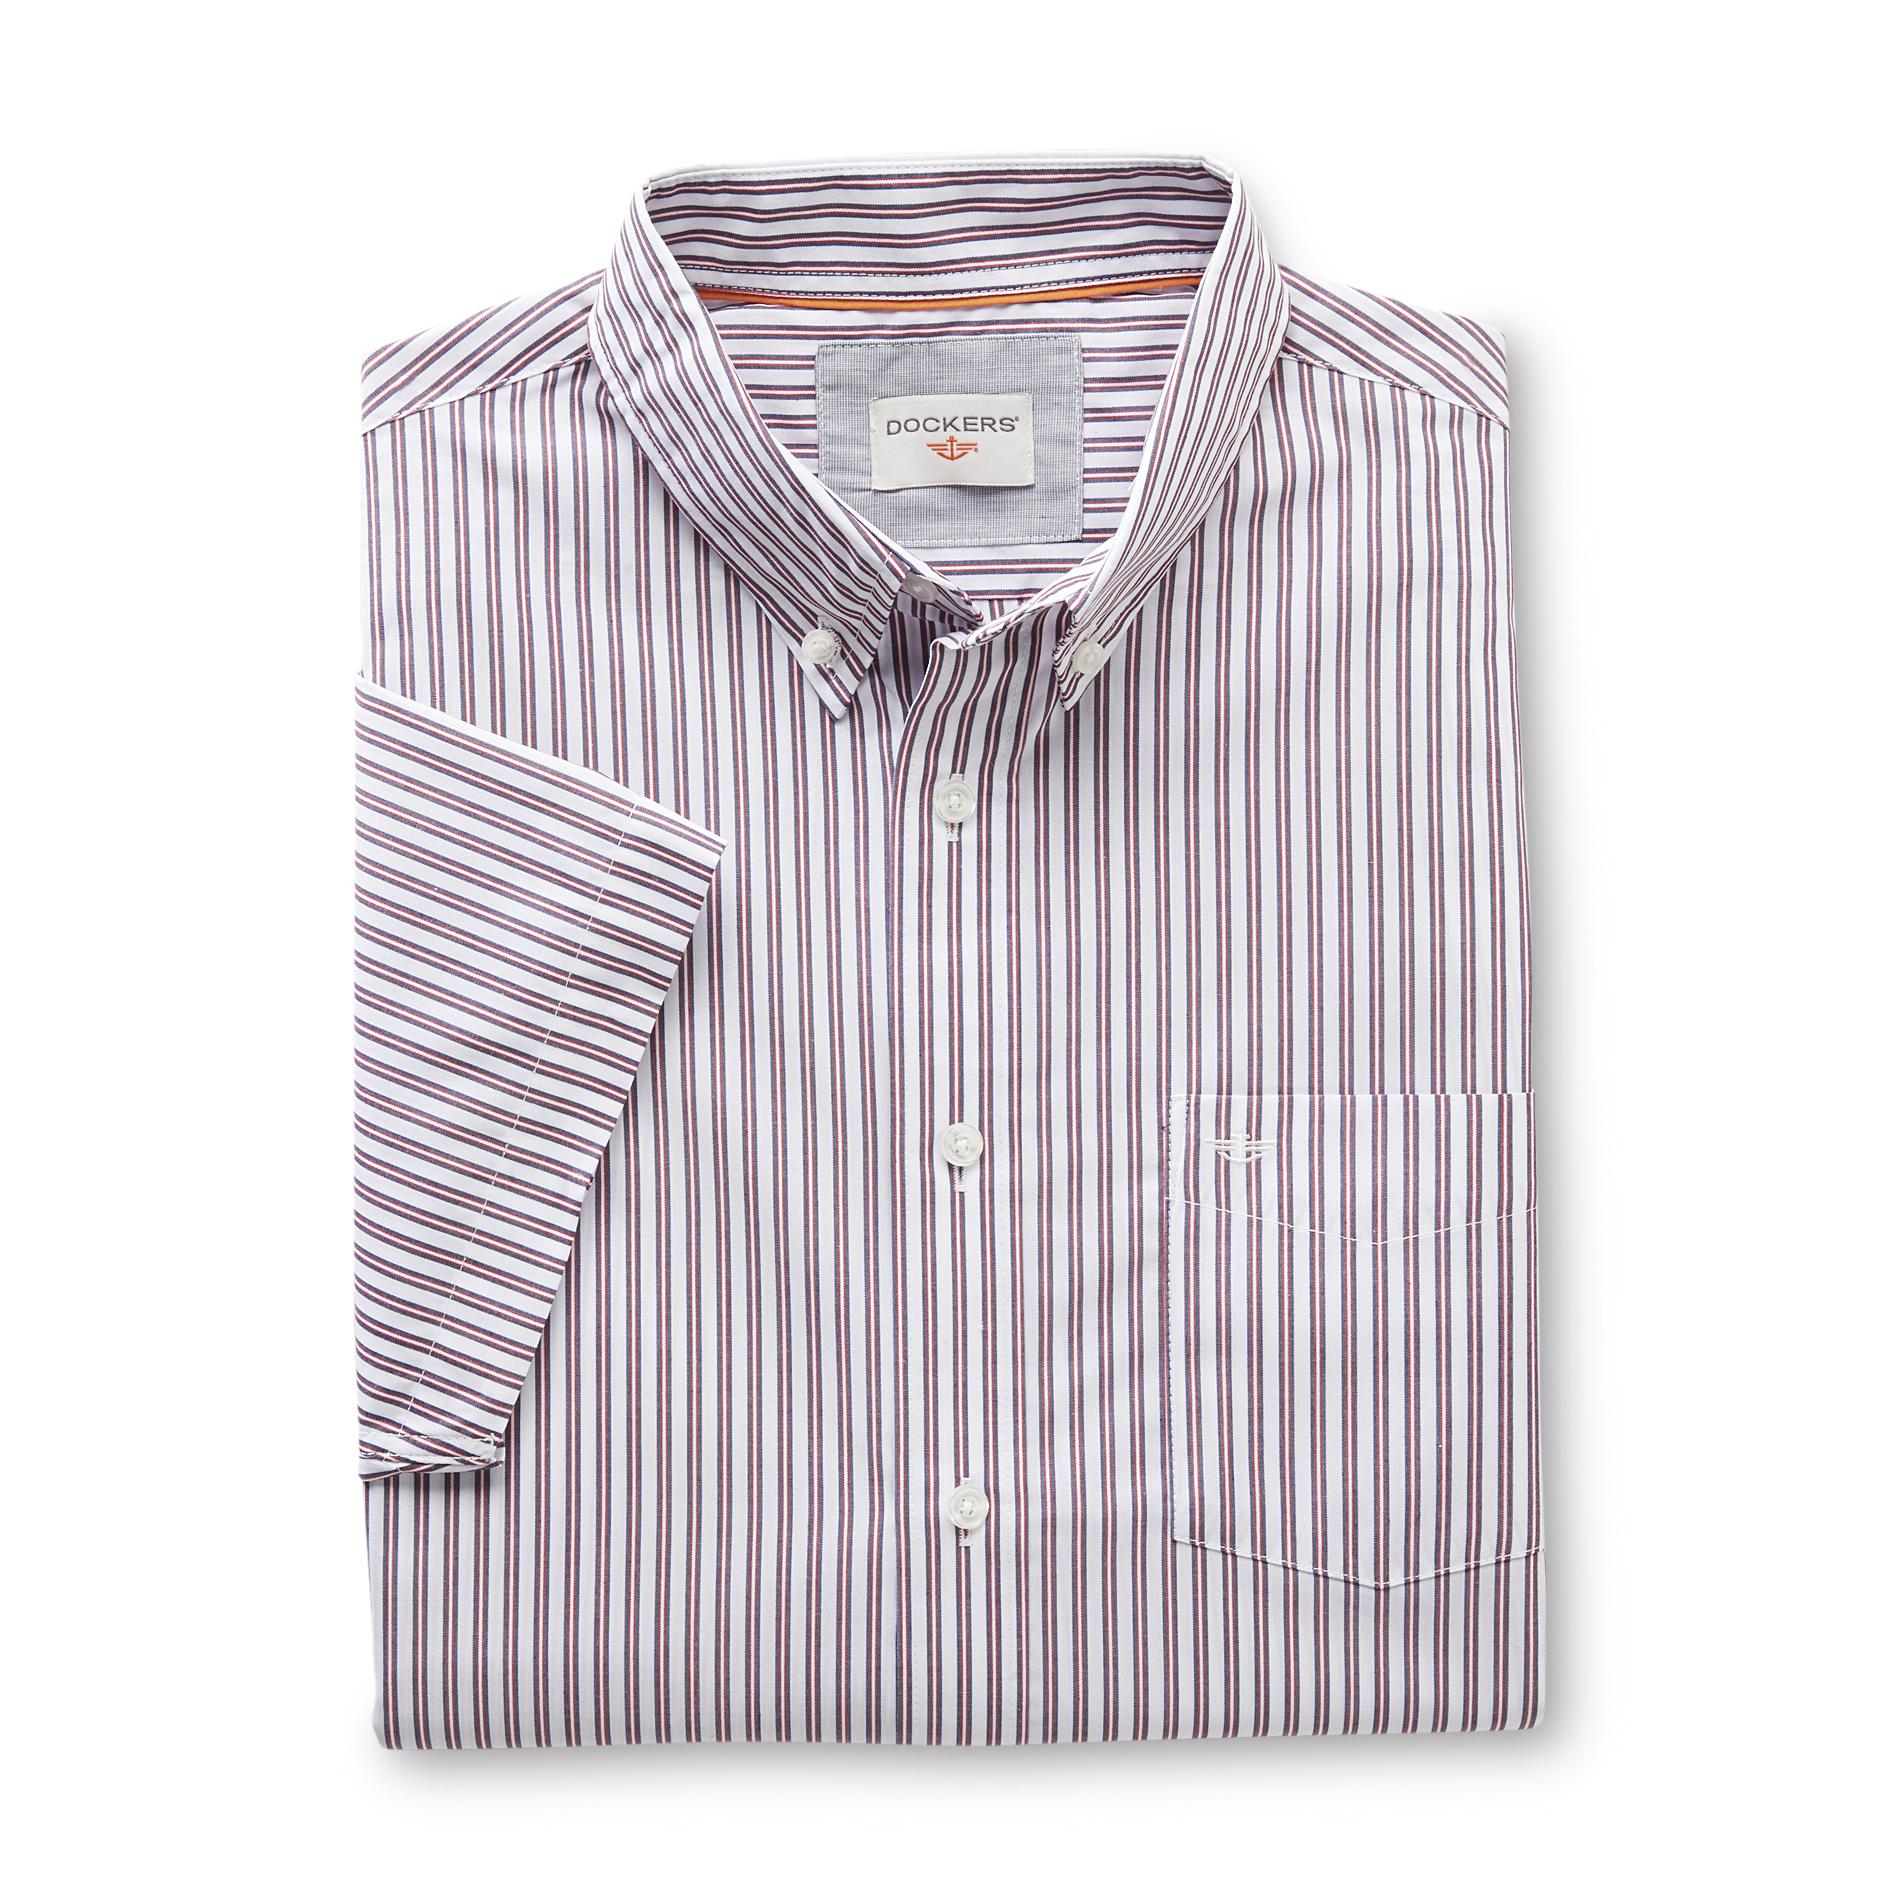 Dockers Men's Short-Sleeve Dress Shirt - Striped